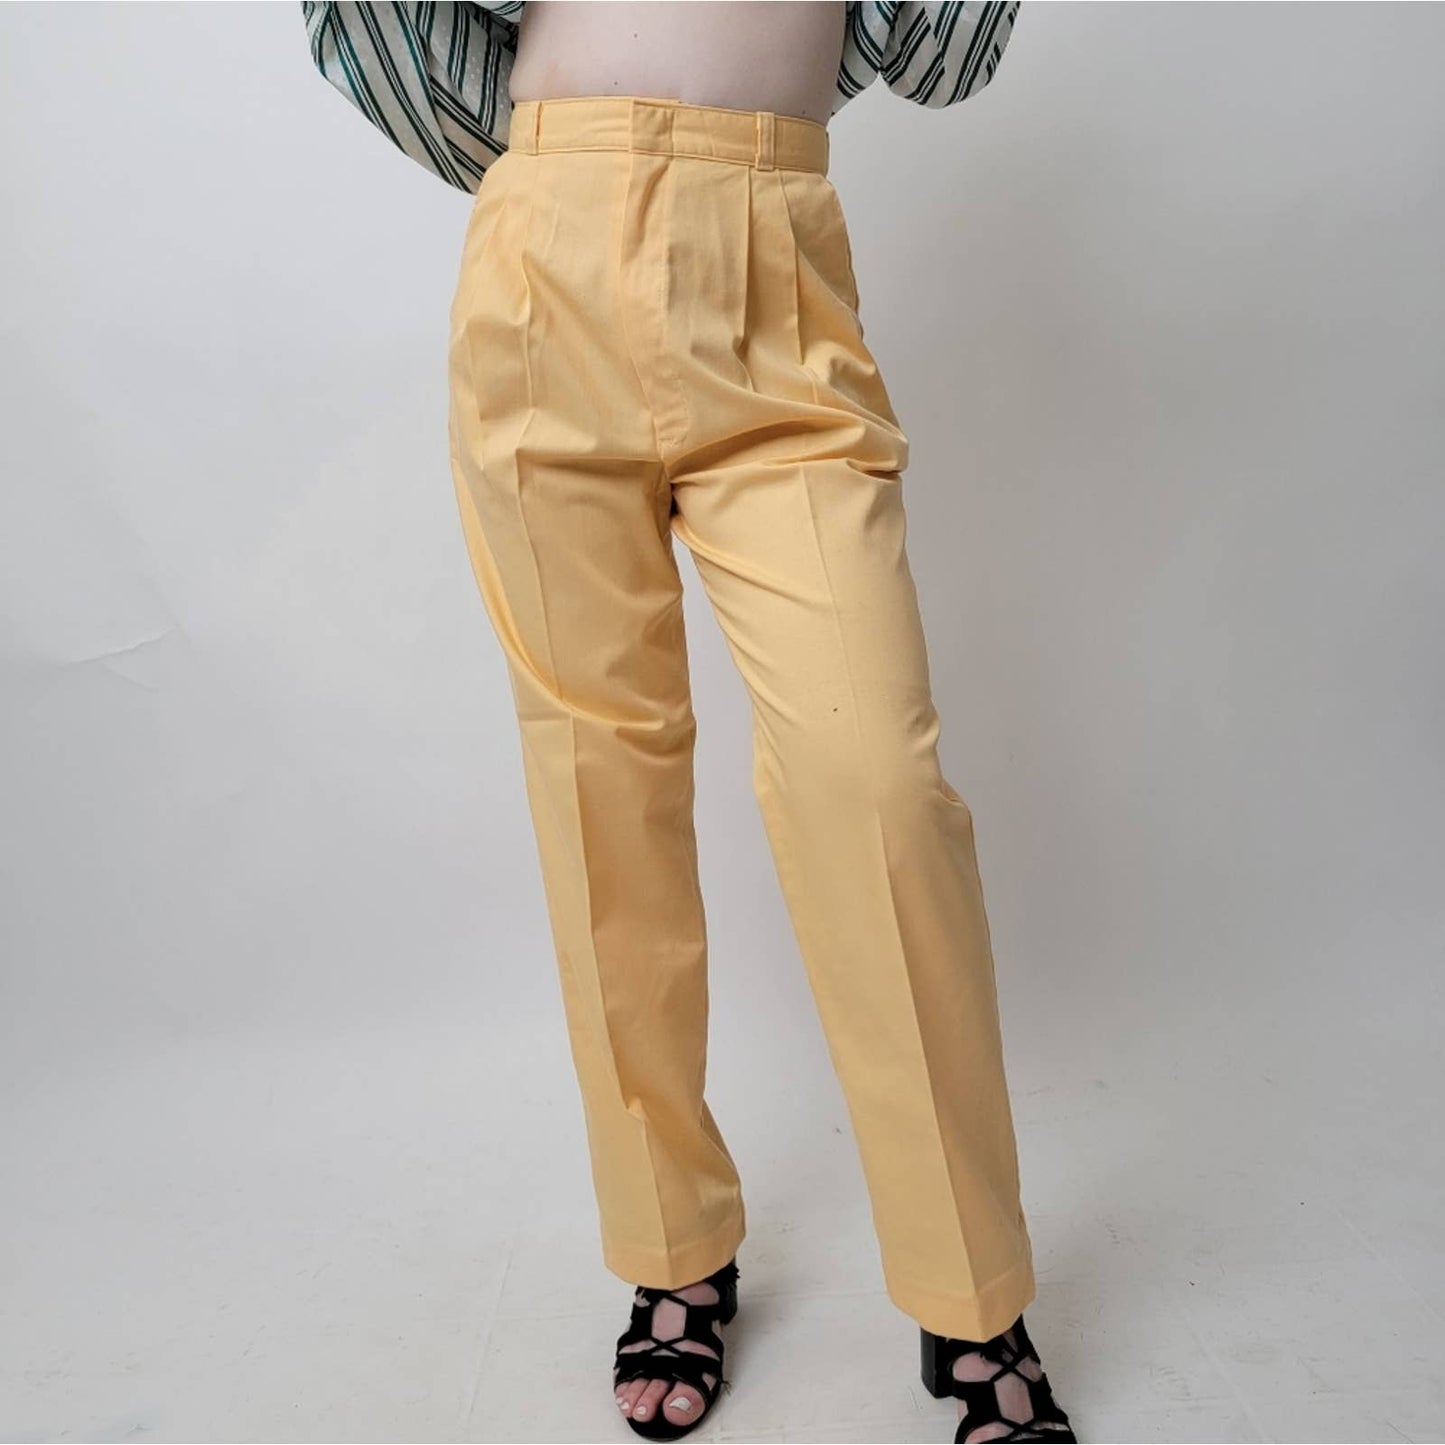 Vintage 70's Cheryl Tiegs canary yellow pastel straight pleated dress pants